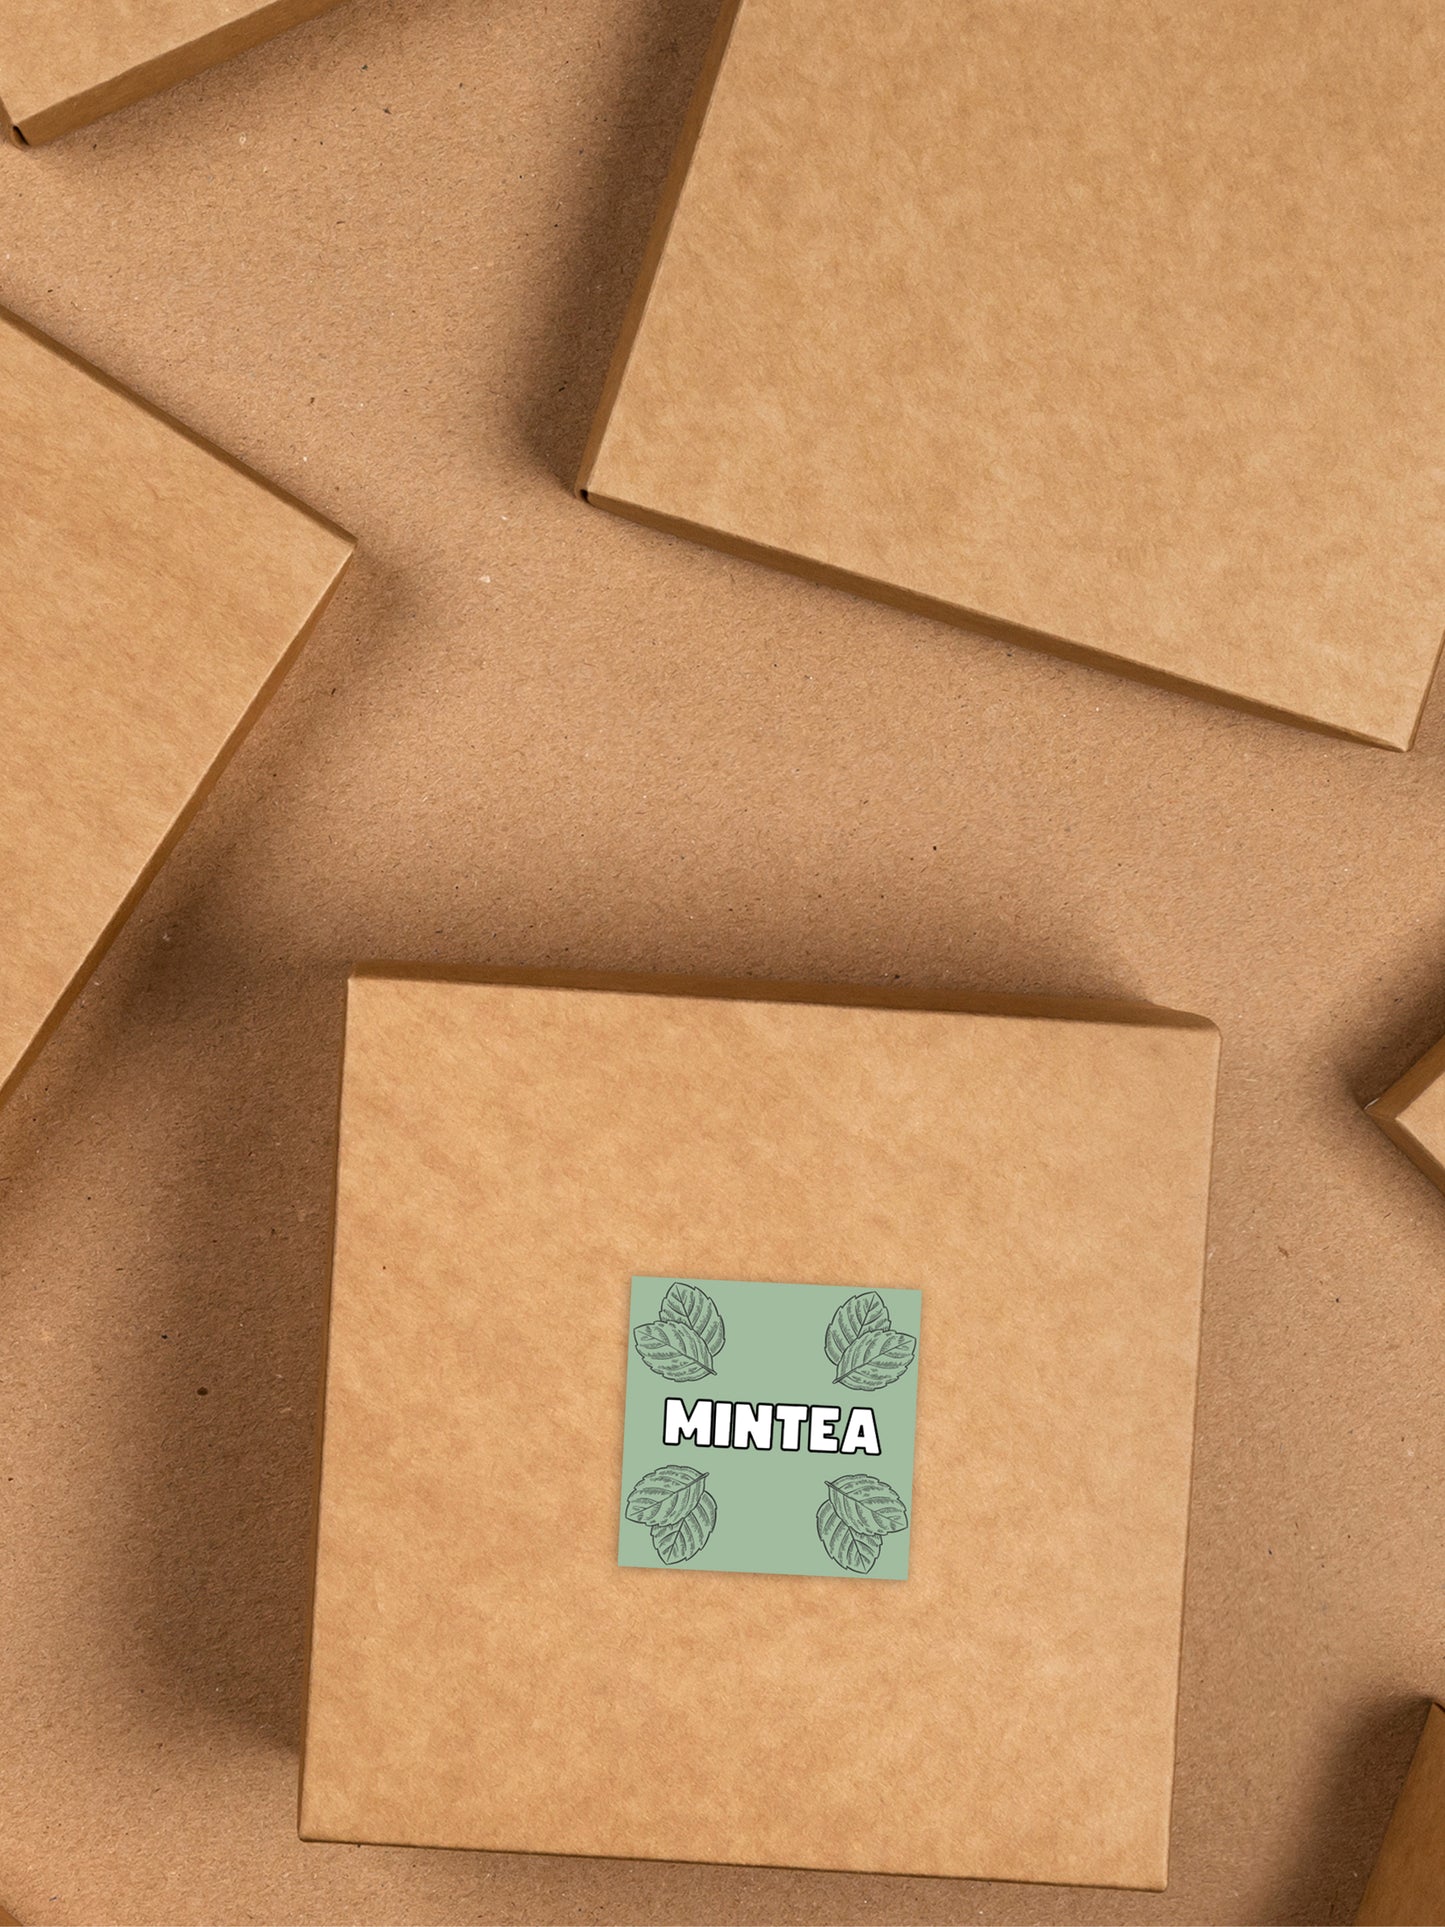 MinTea Box